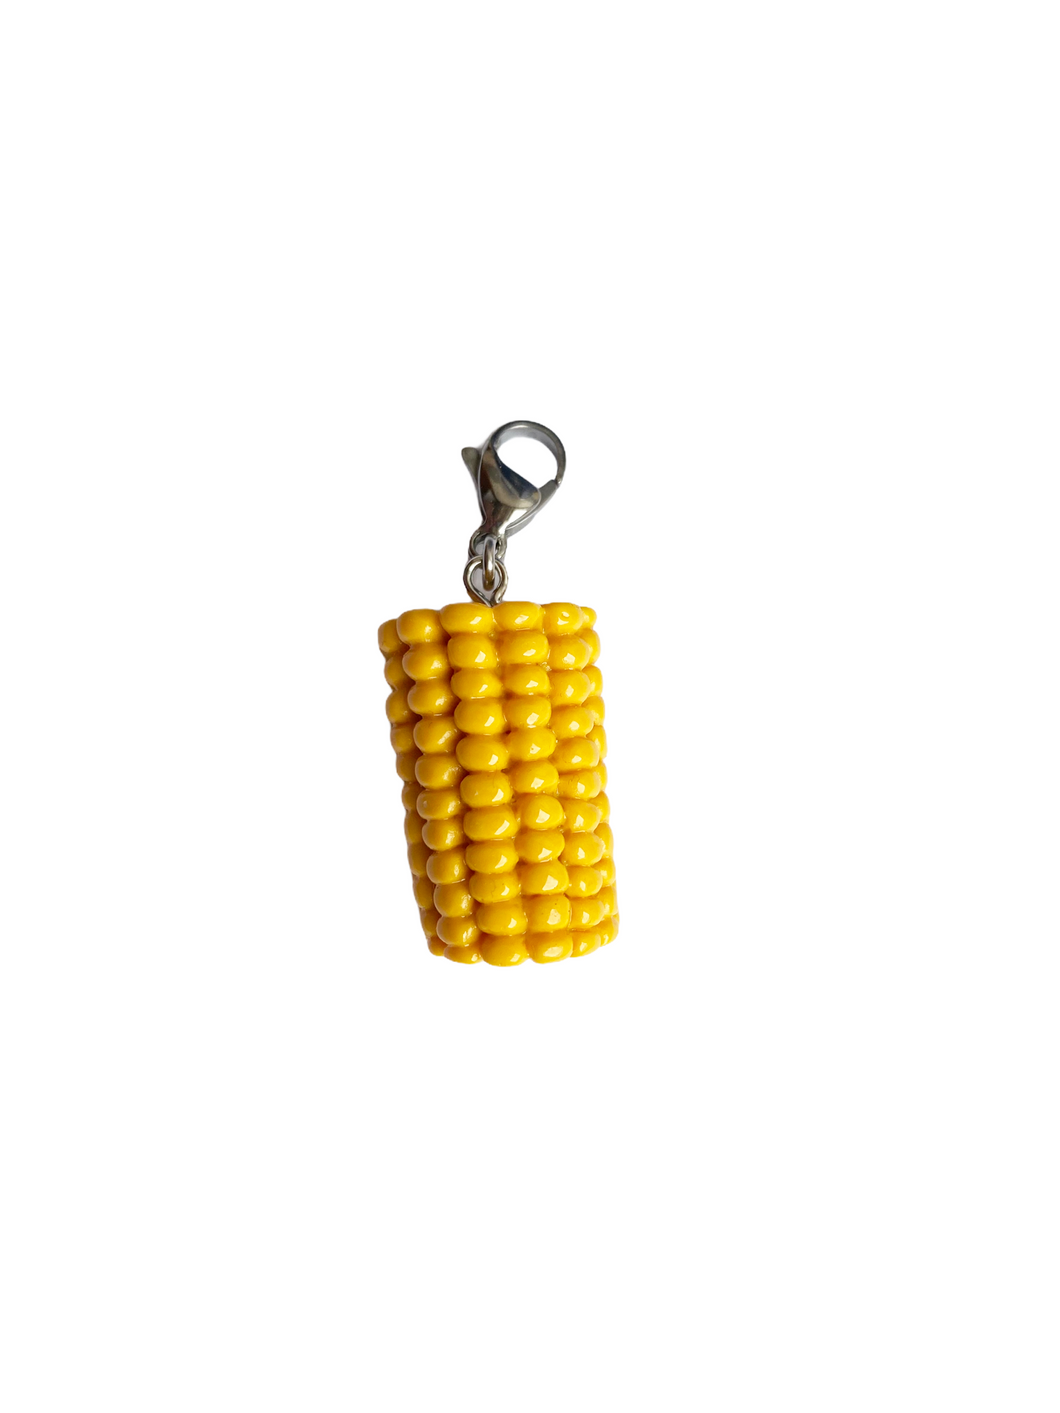 Corn on the Cob Charm - Blackcurrant Pop